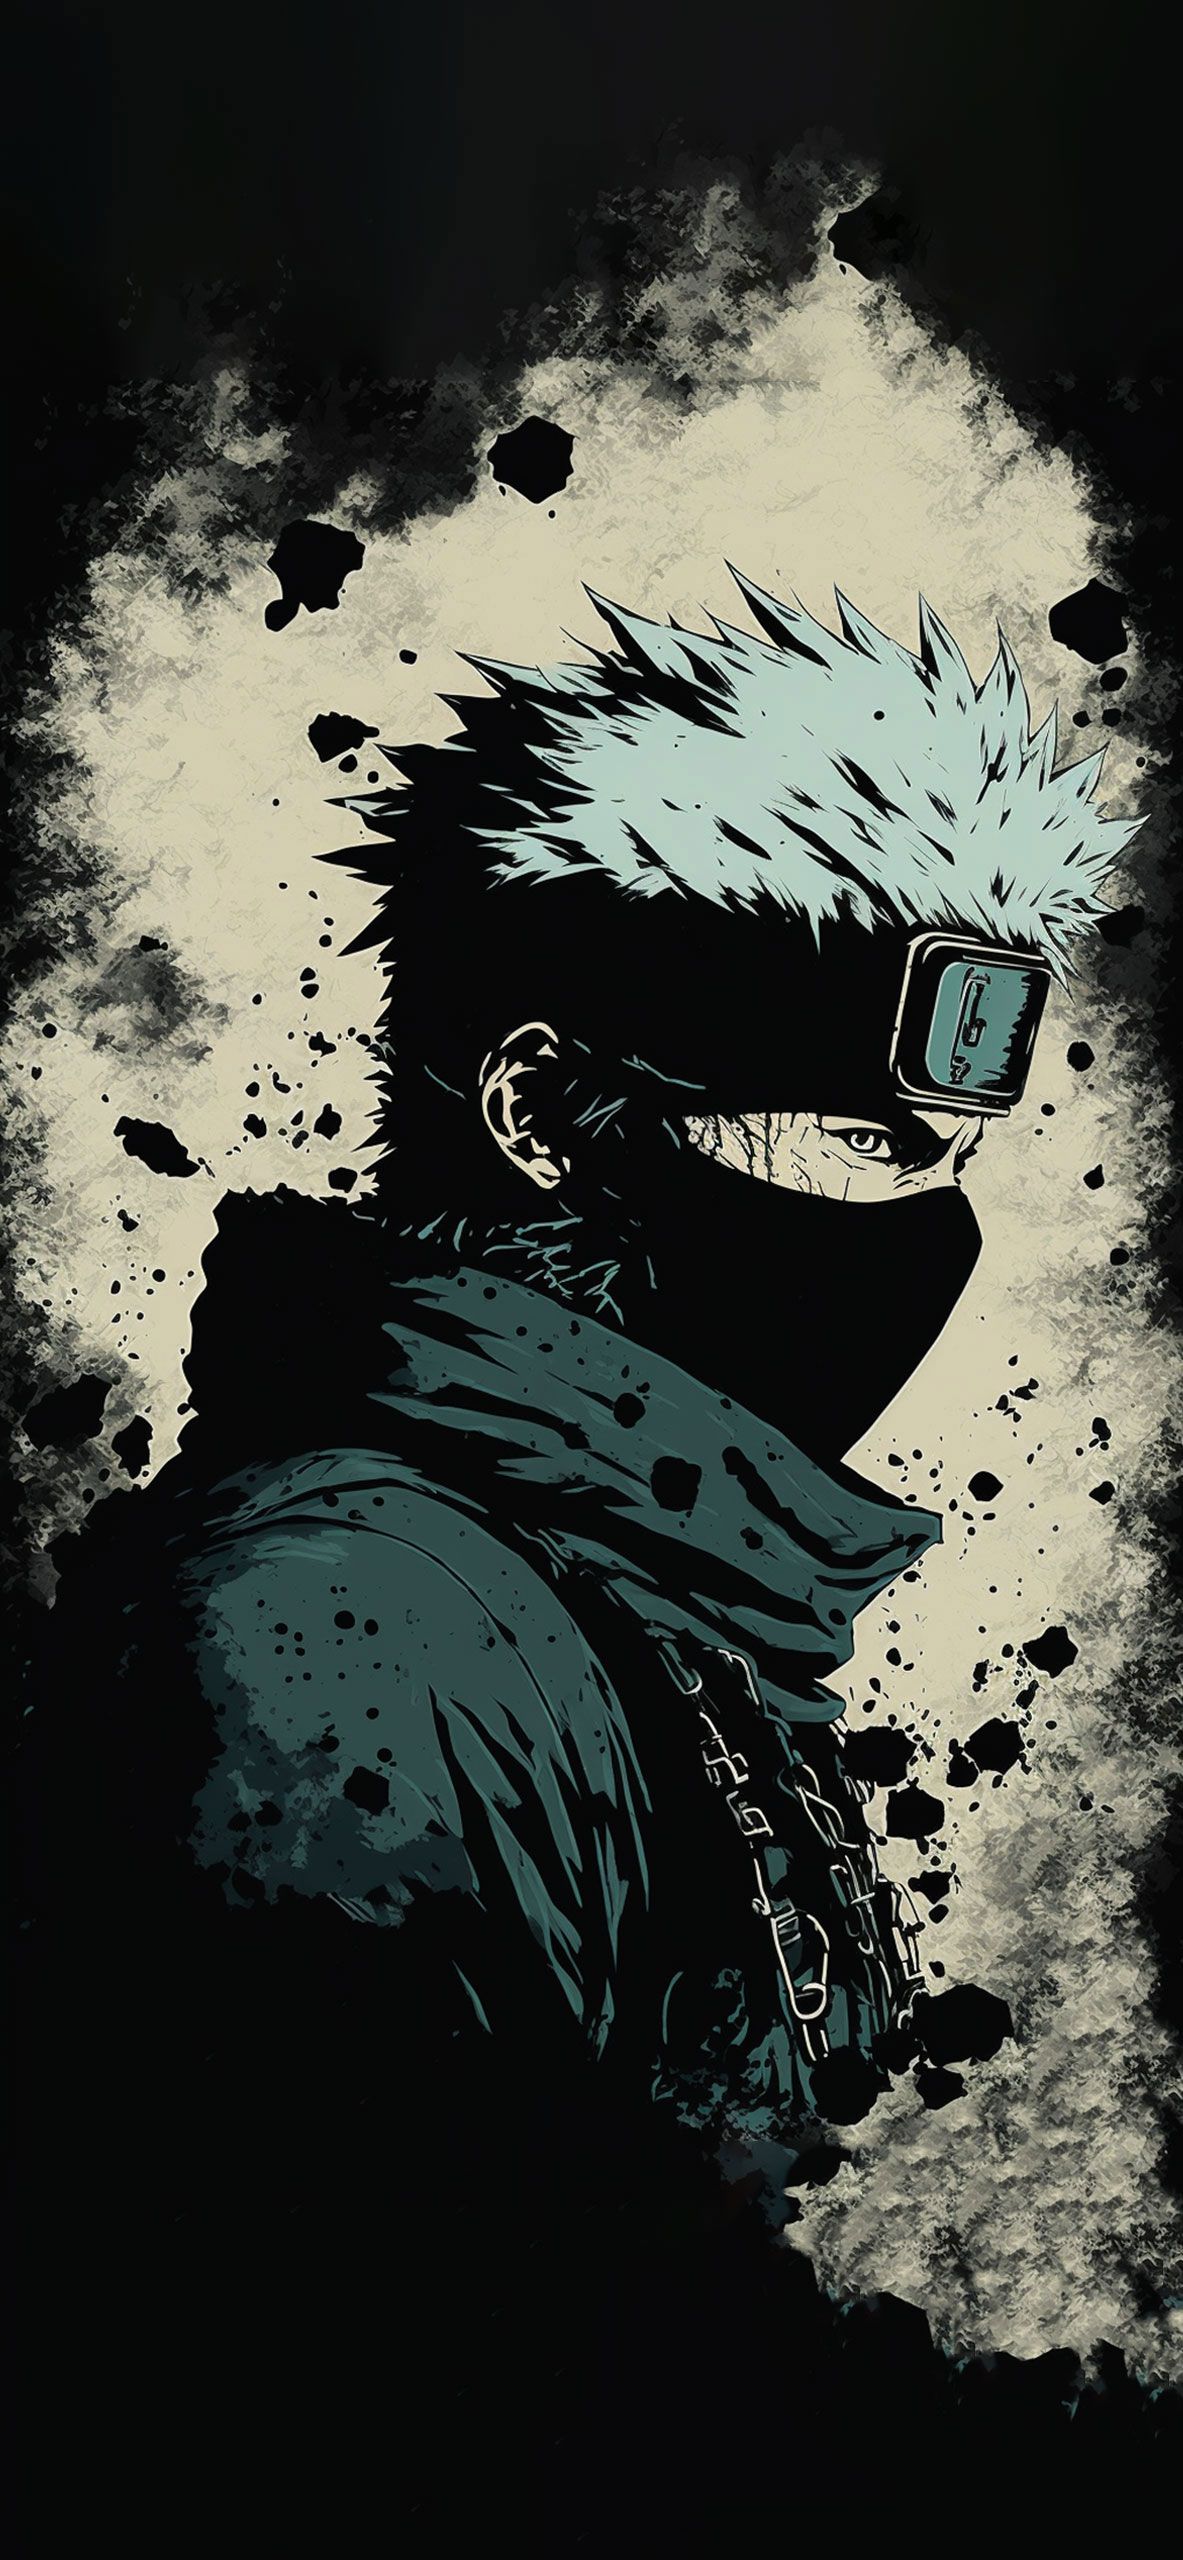 A poster of anime character with blue hair - Naruto, Kakashi Hatake